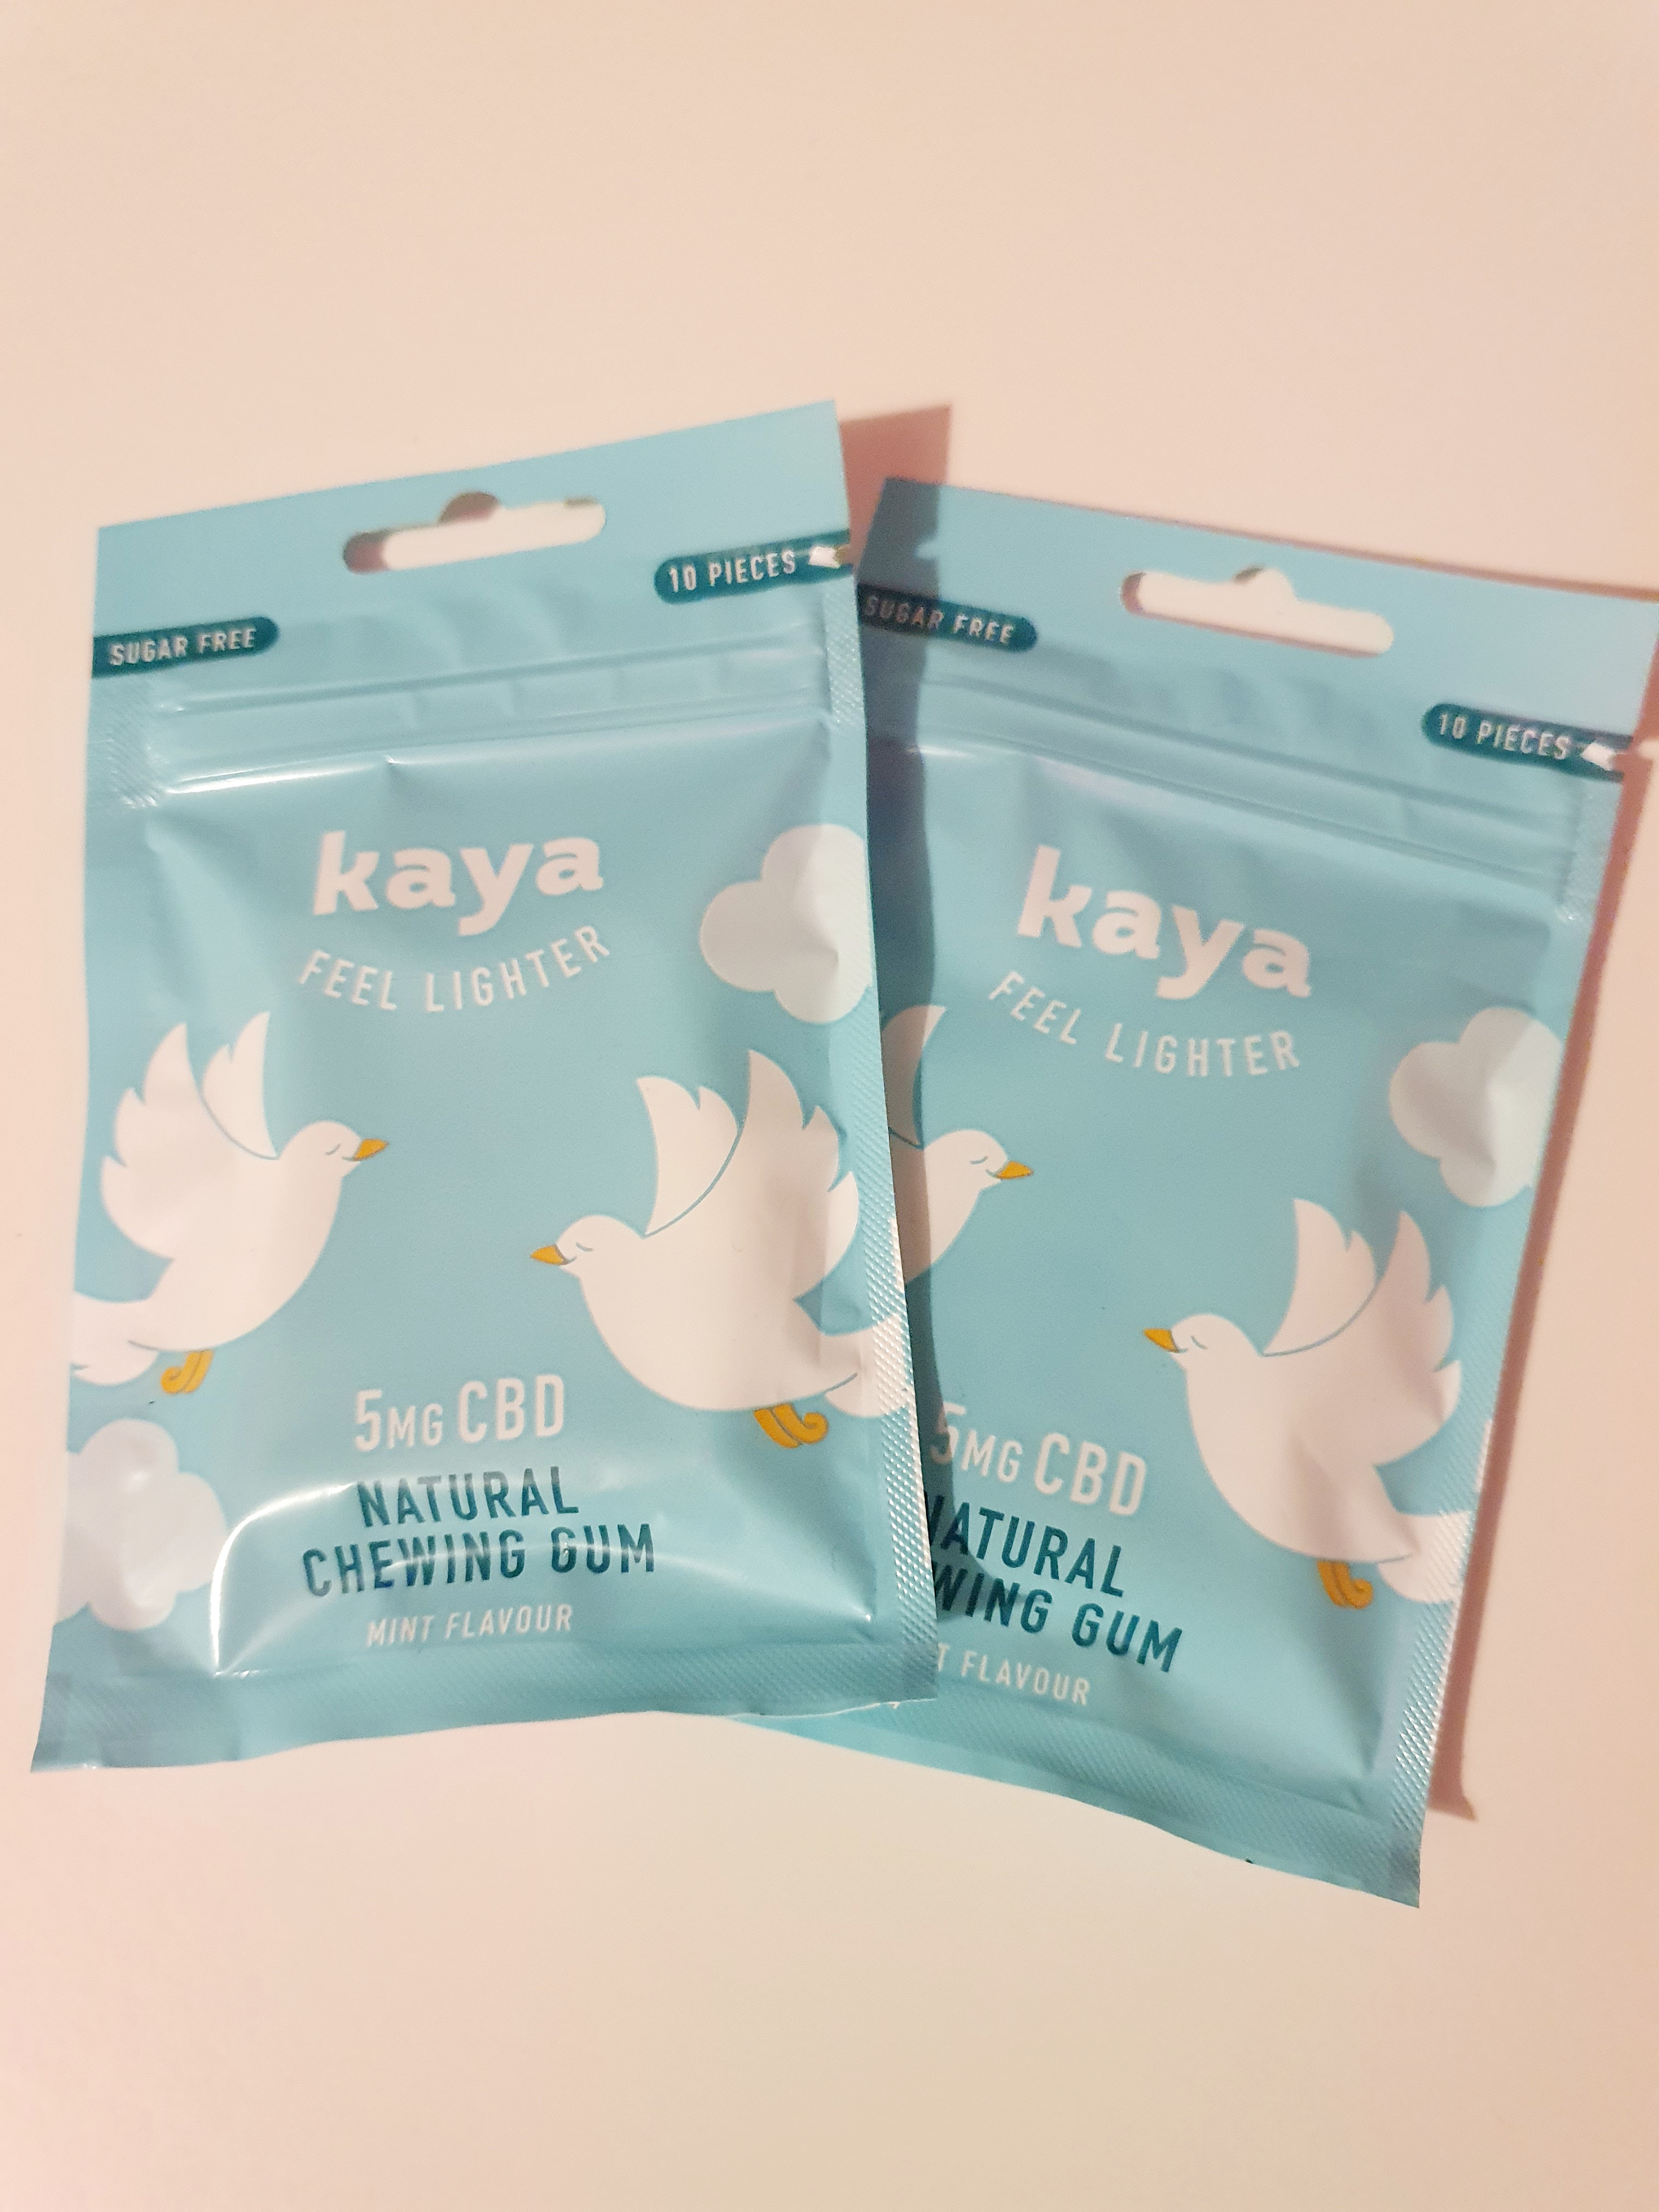 Kaya CBD chewing gum review 😁🤑